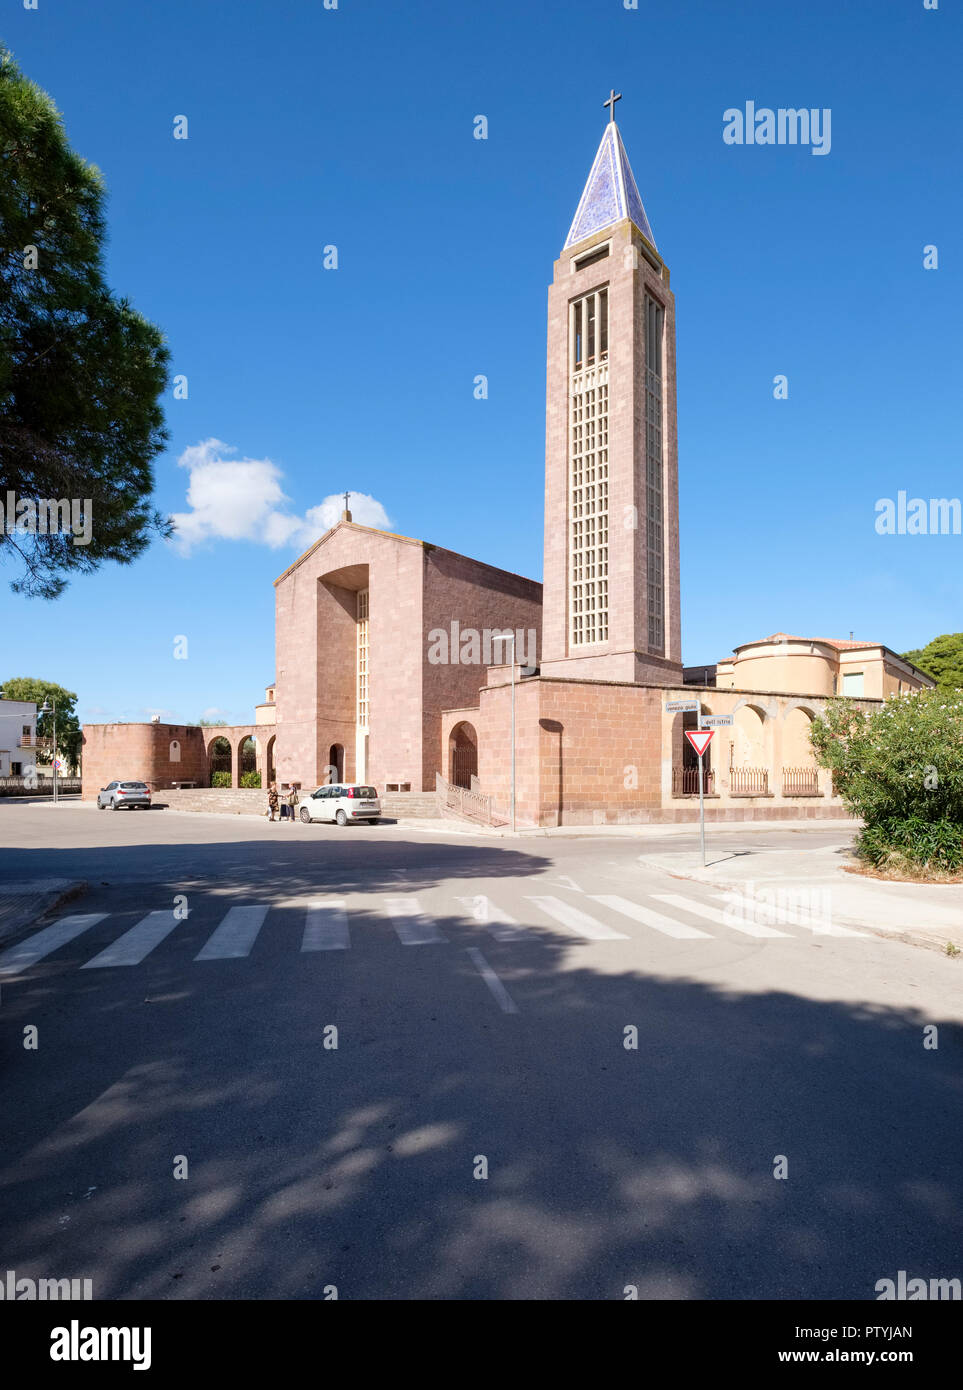 La chiesa DAL PREVAT 2 di San Marco, Fertilia Pfarrkirche San Marco (1936, 2 PST), Italienisch rationalistischen Stil, Fertilia, Sardinien, Italien Stockfoto